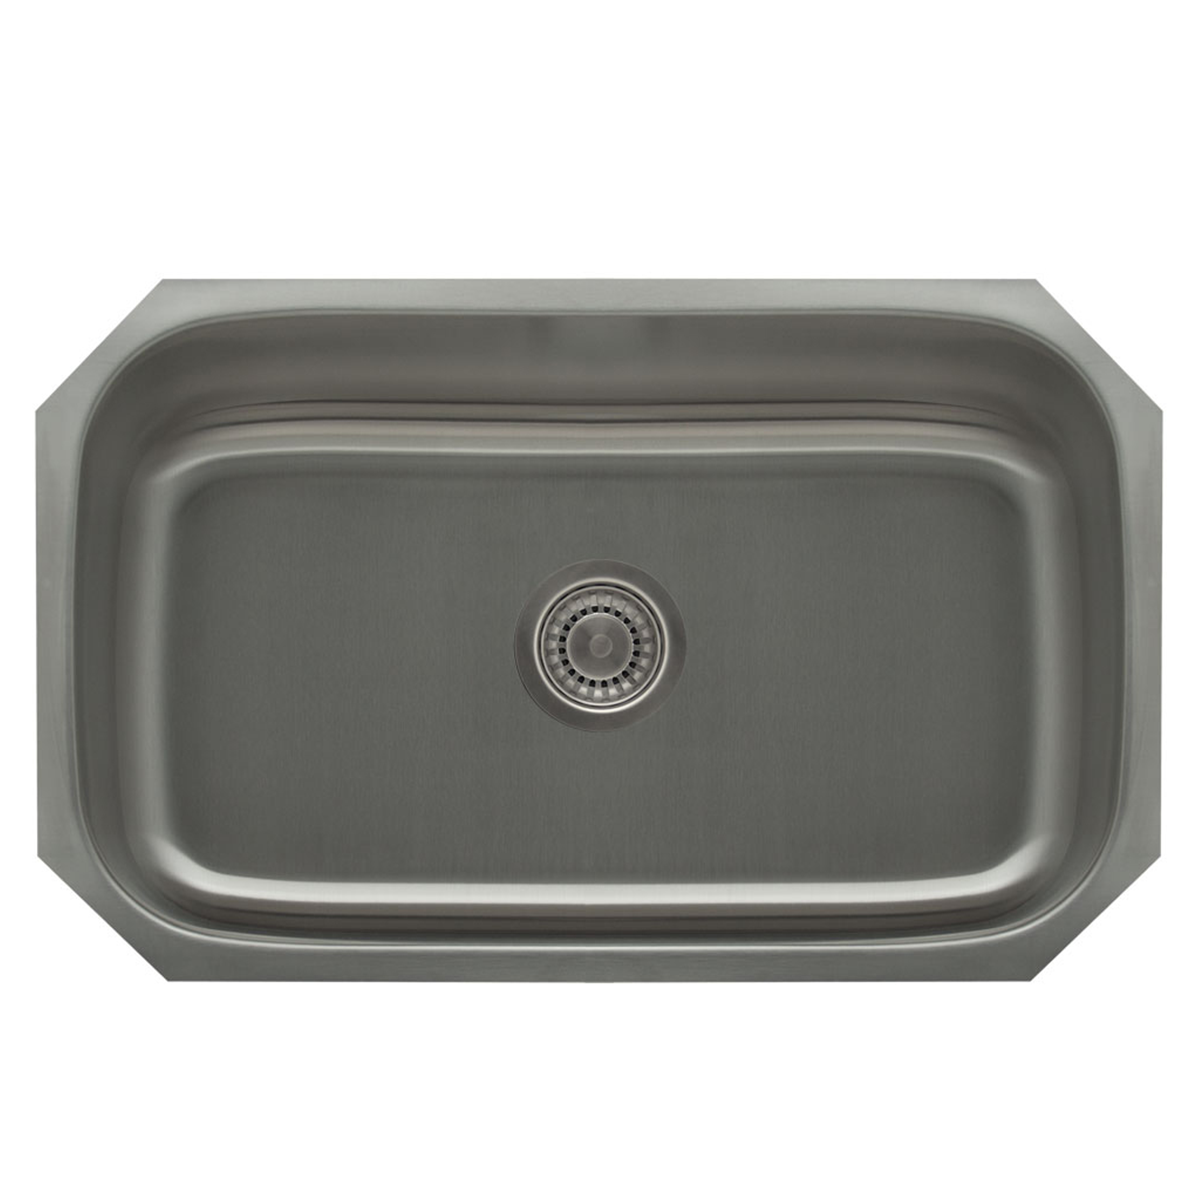 Pelican Int'l Signature Series PL-VS3018 18 Gauge Stainless Steel Single Bowl Undermount Kitchen Sink 30" x 18"